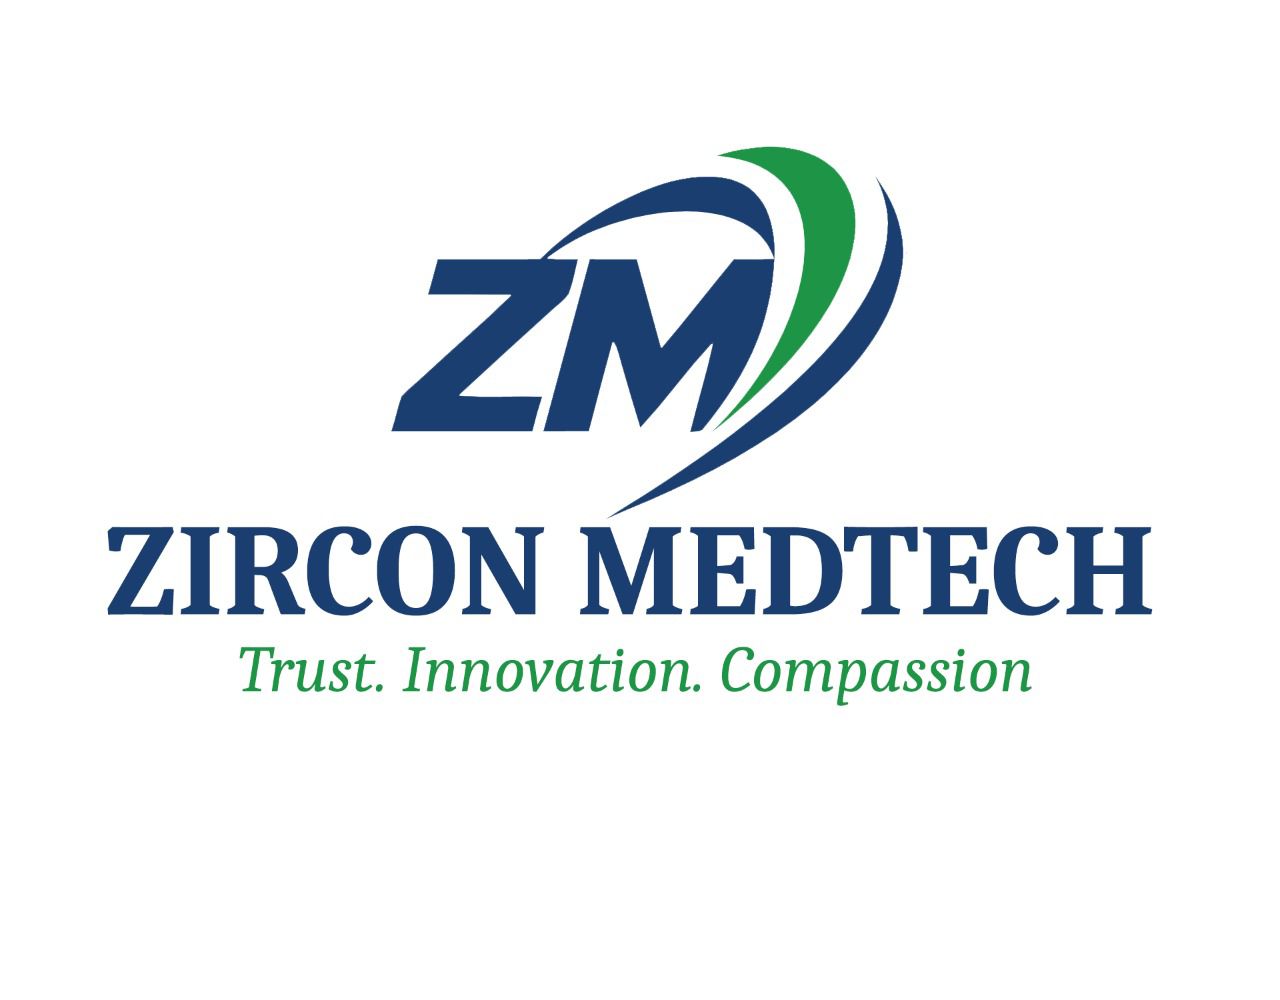 Zircon Medtech